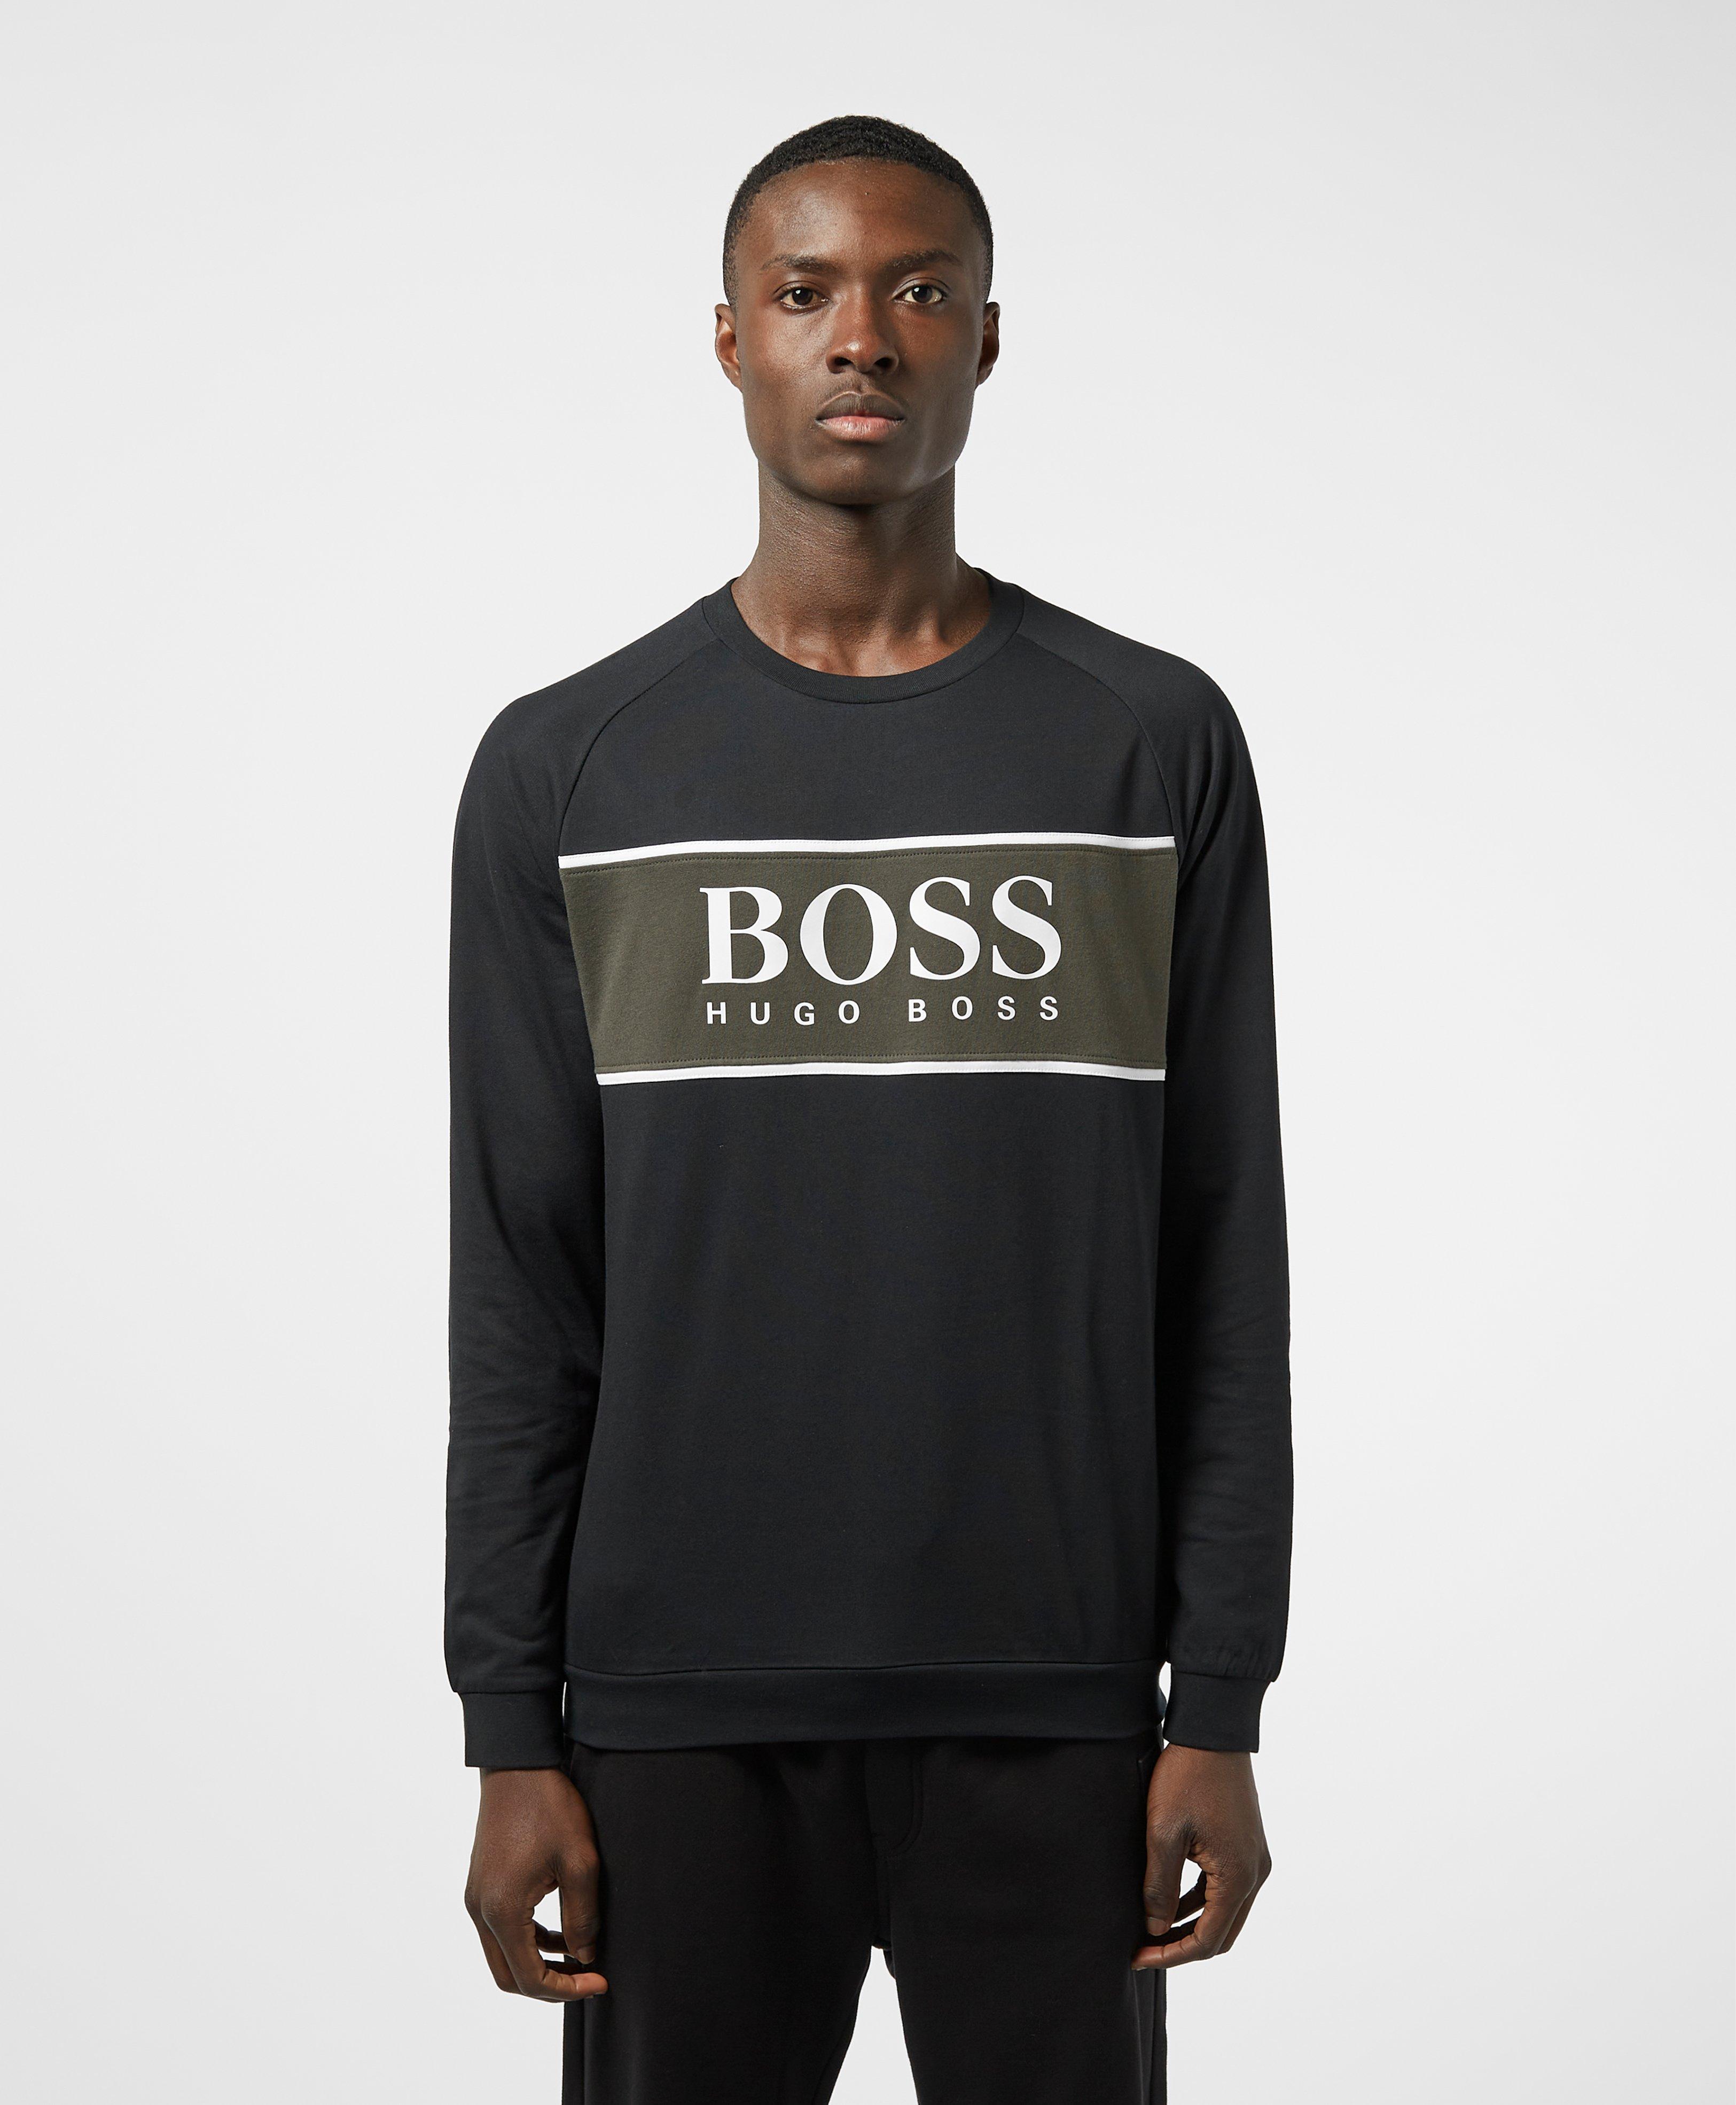 Hugo Boss Authentic Sweatshirt Hot Sale, SAVE 59%.